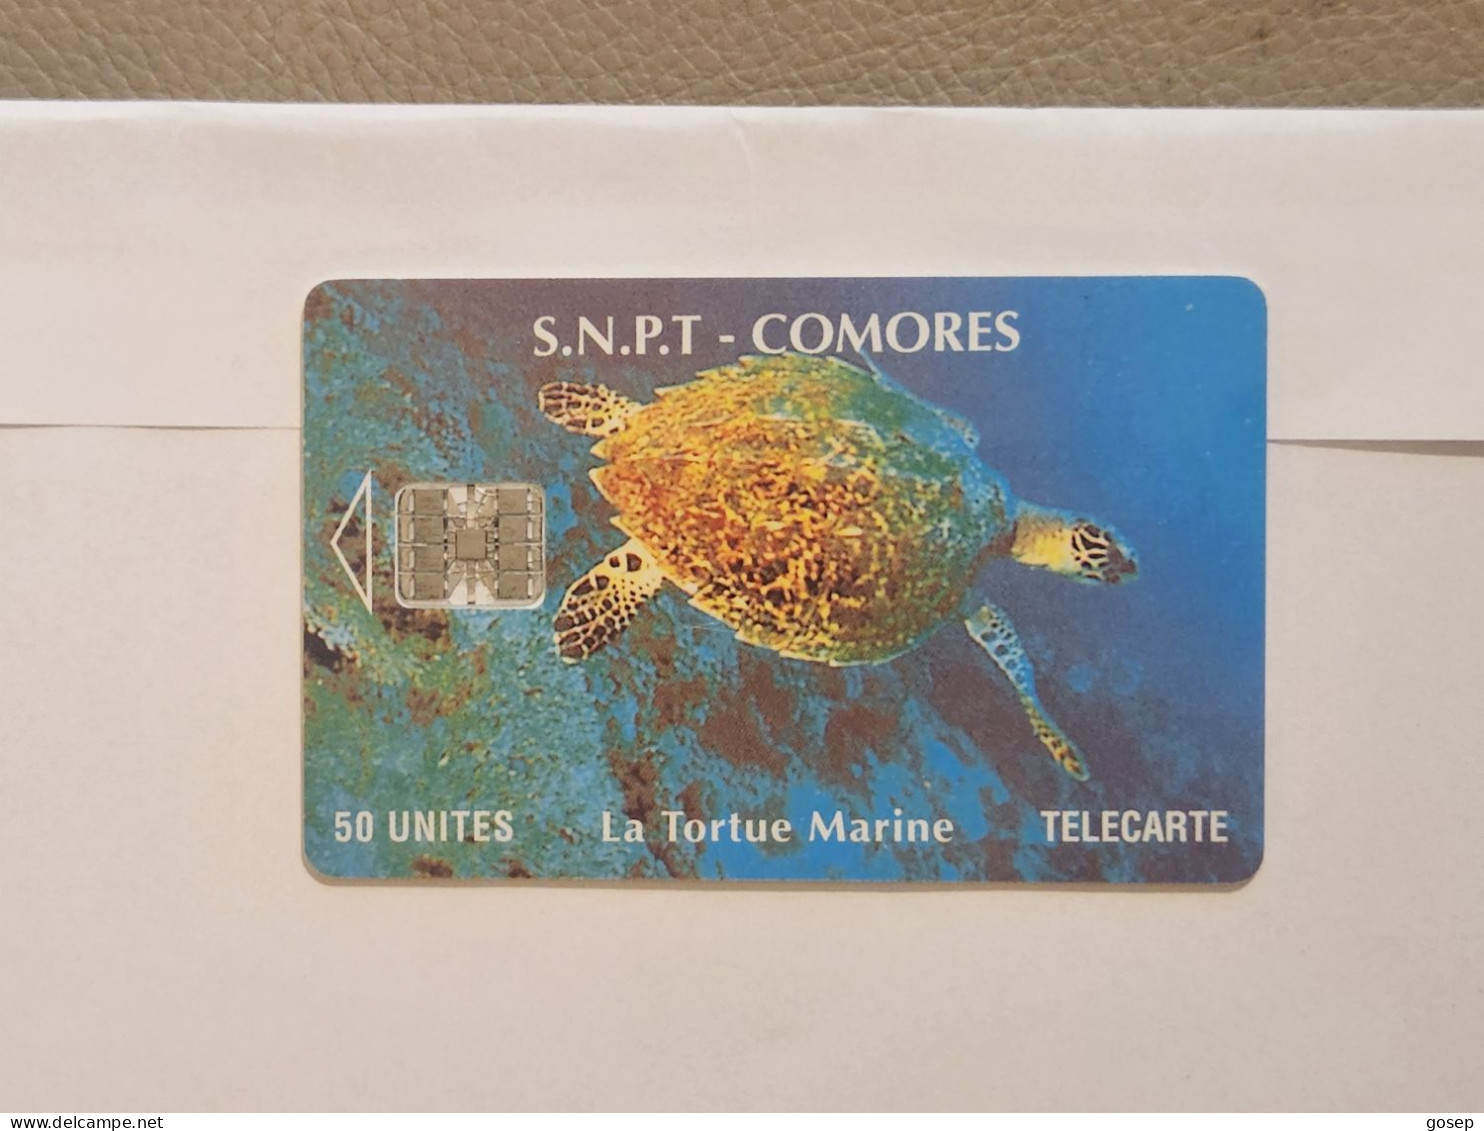 Comores-(KM-OPT-0010C)-La Tortue Marine-(9)-(50units)-(C5B155335)-used Card+1card Prepiad/gift Free - Comoren